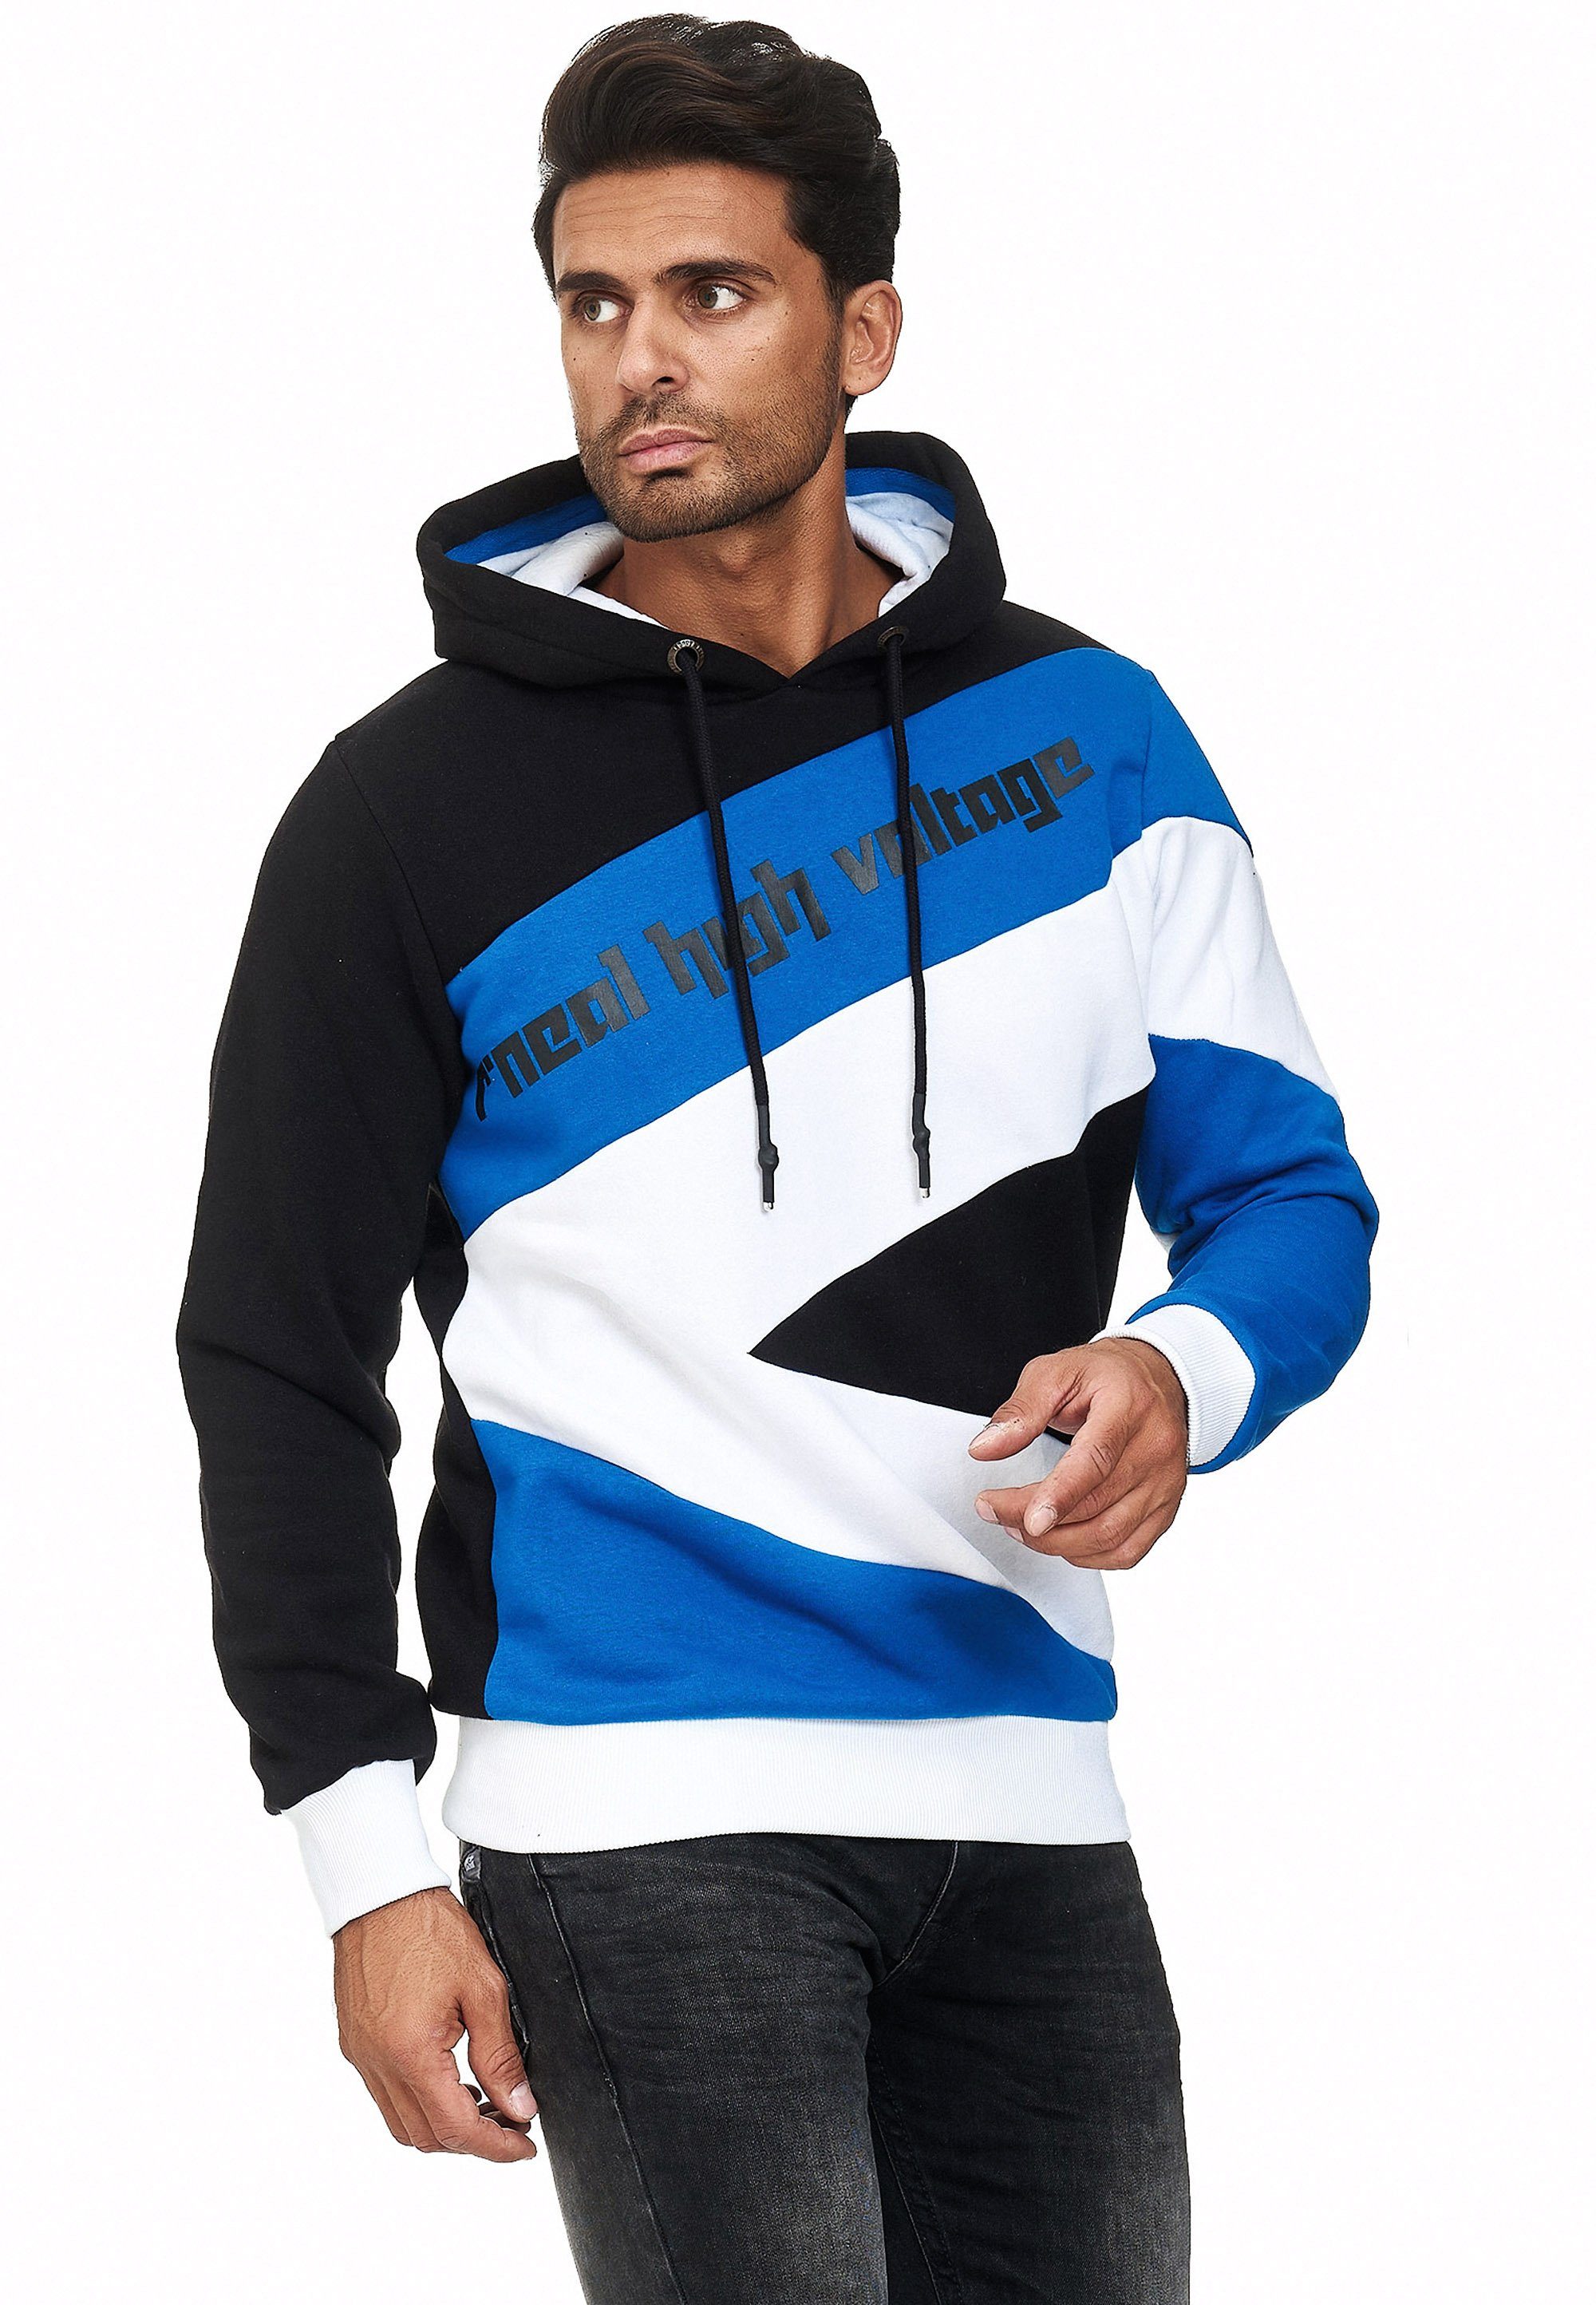 sportlichem Rusty Neal Kapuzensweatshirt schwarz-blau in Design